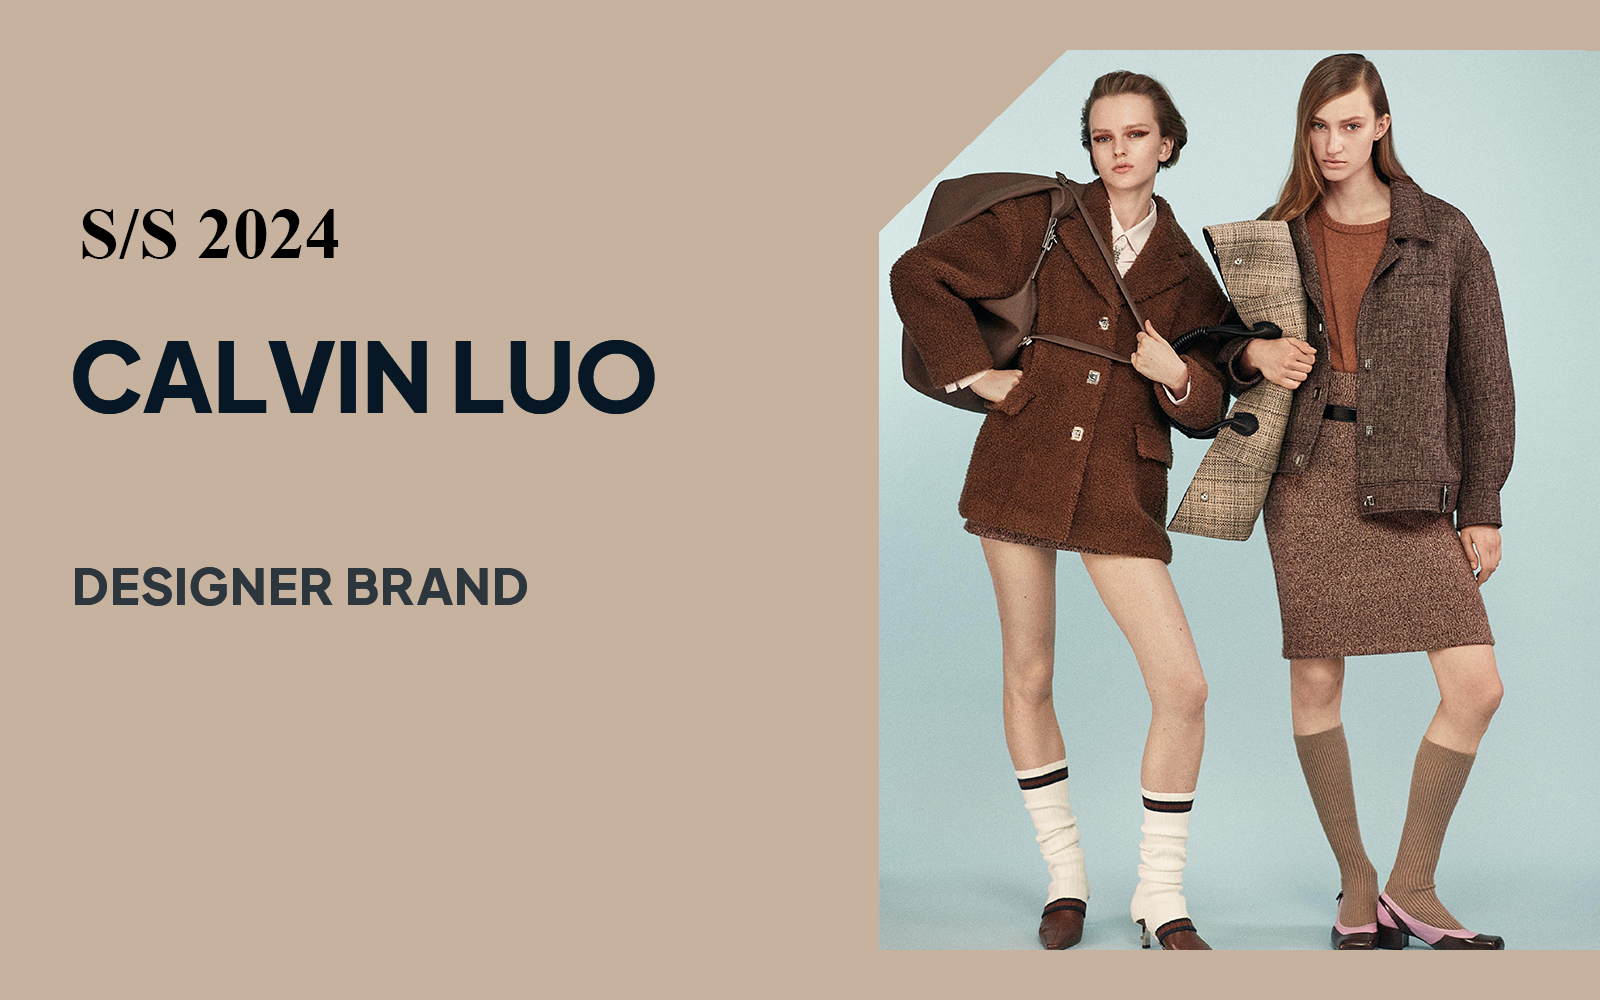 Modern College -- The Analysis of Calvin Luo The Womenswear Designer Brand